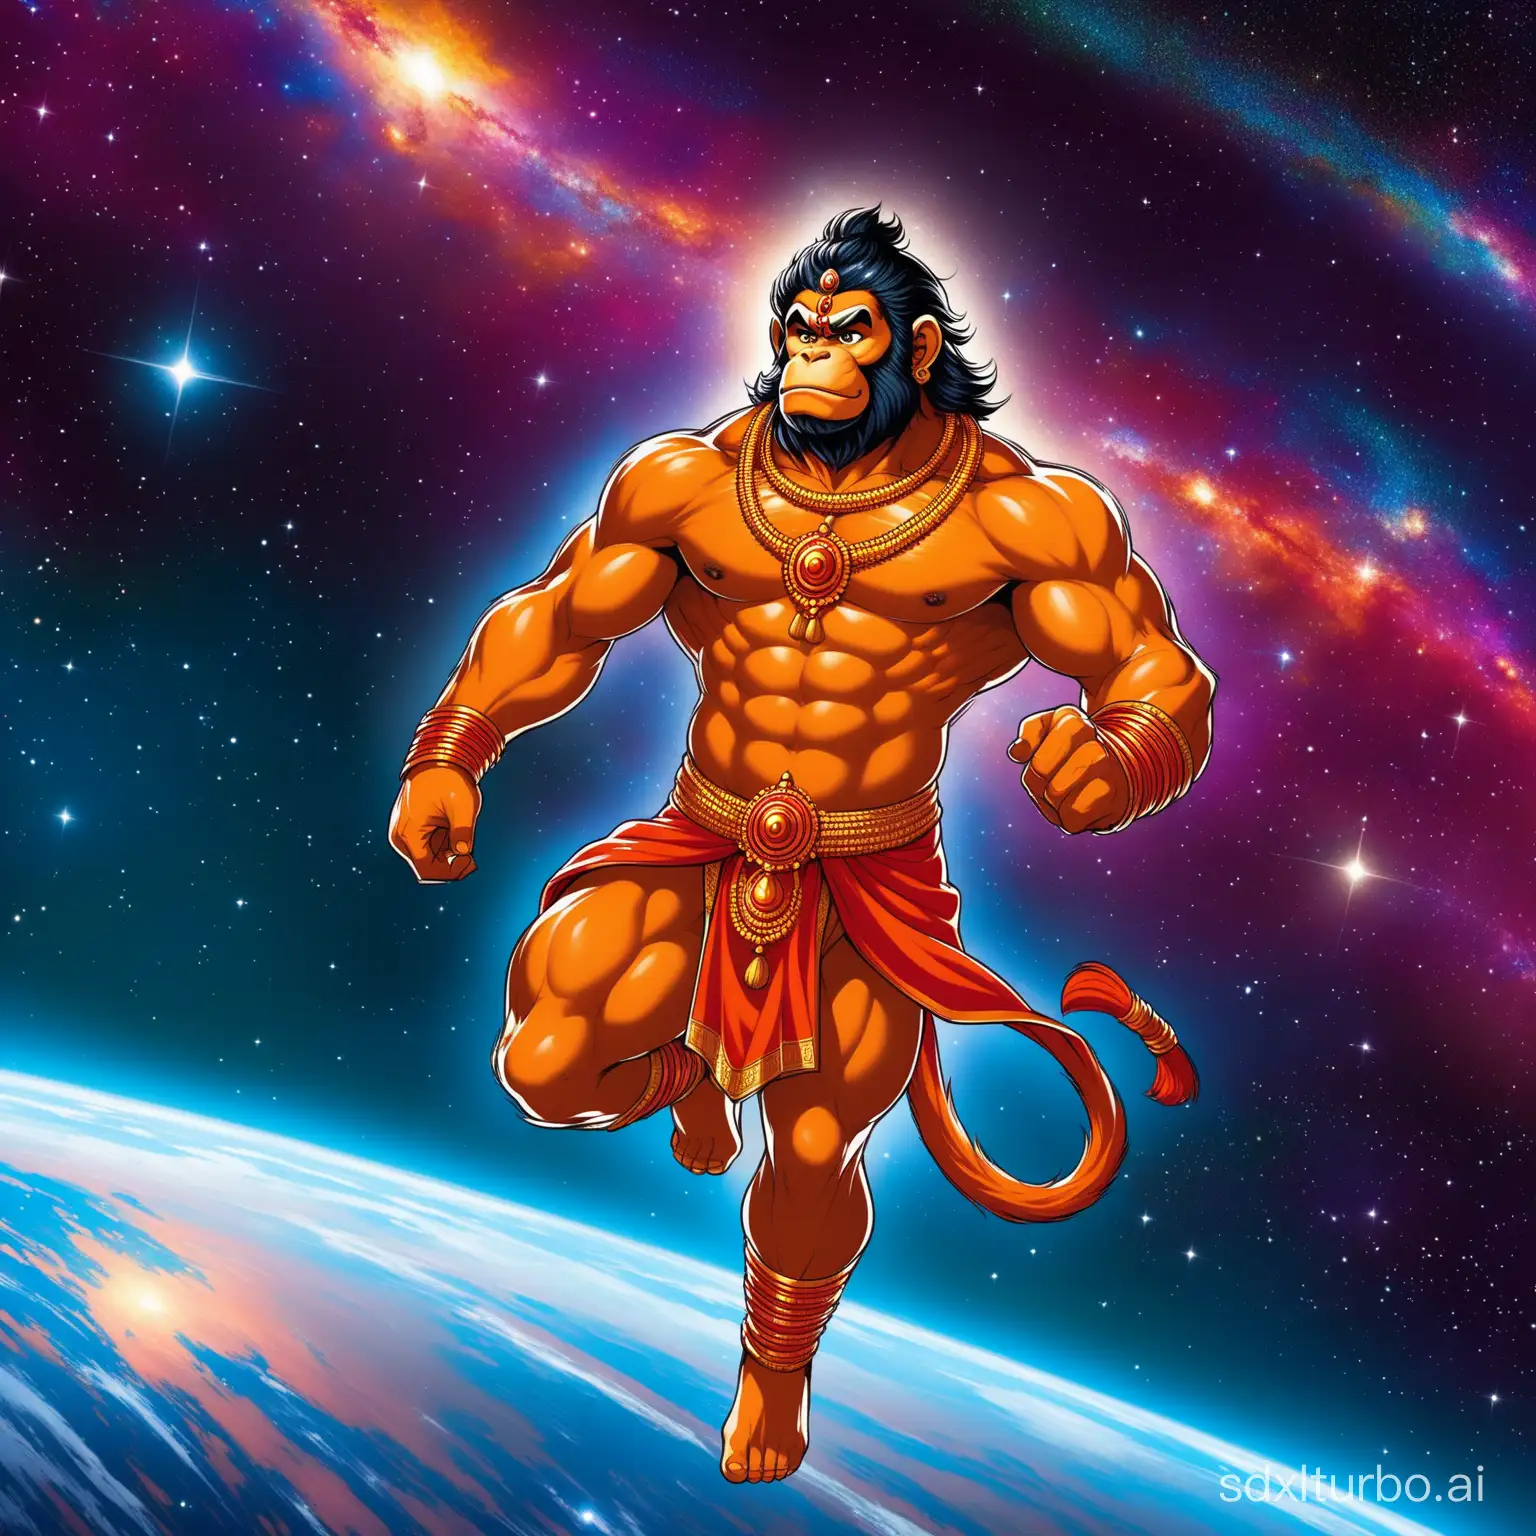 Hanuman-Marvel-Superhero-in-Space-Art